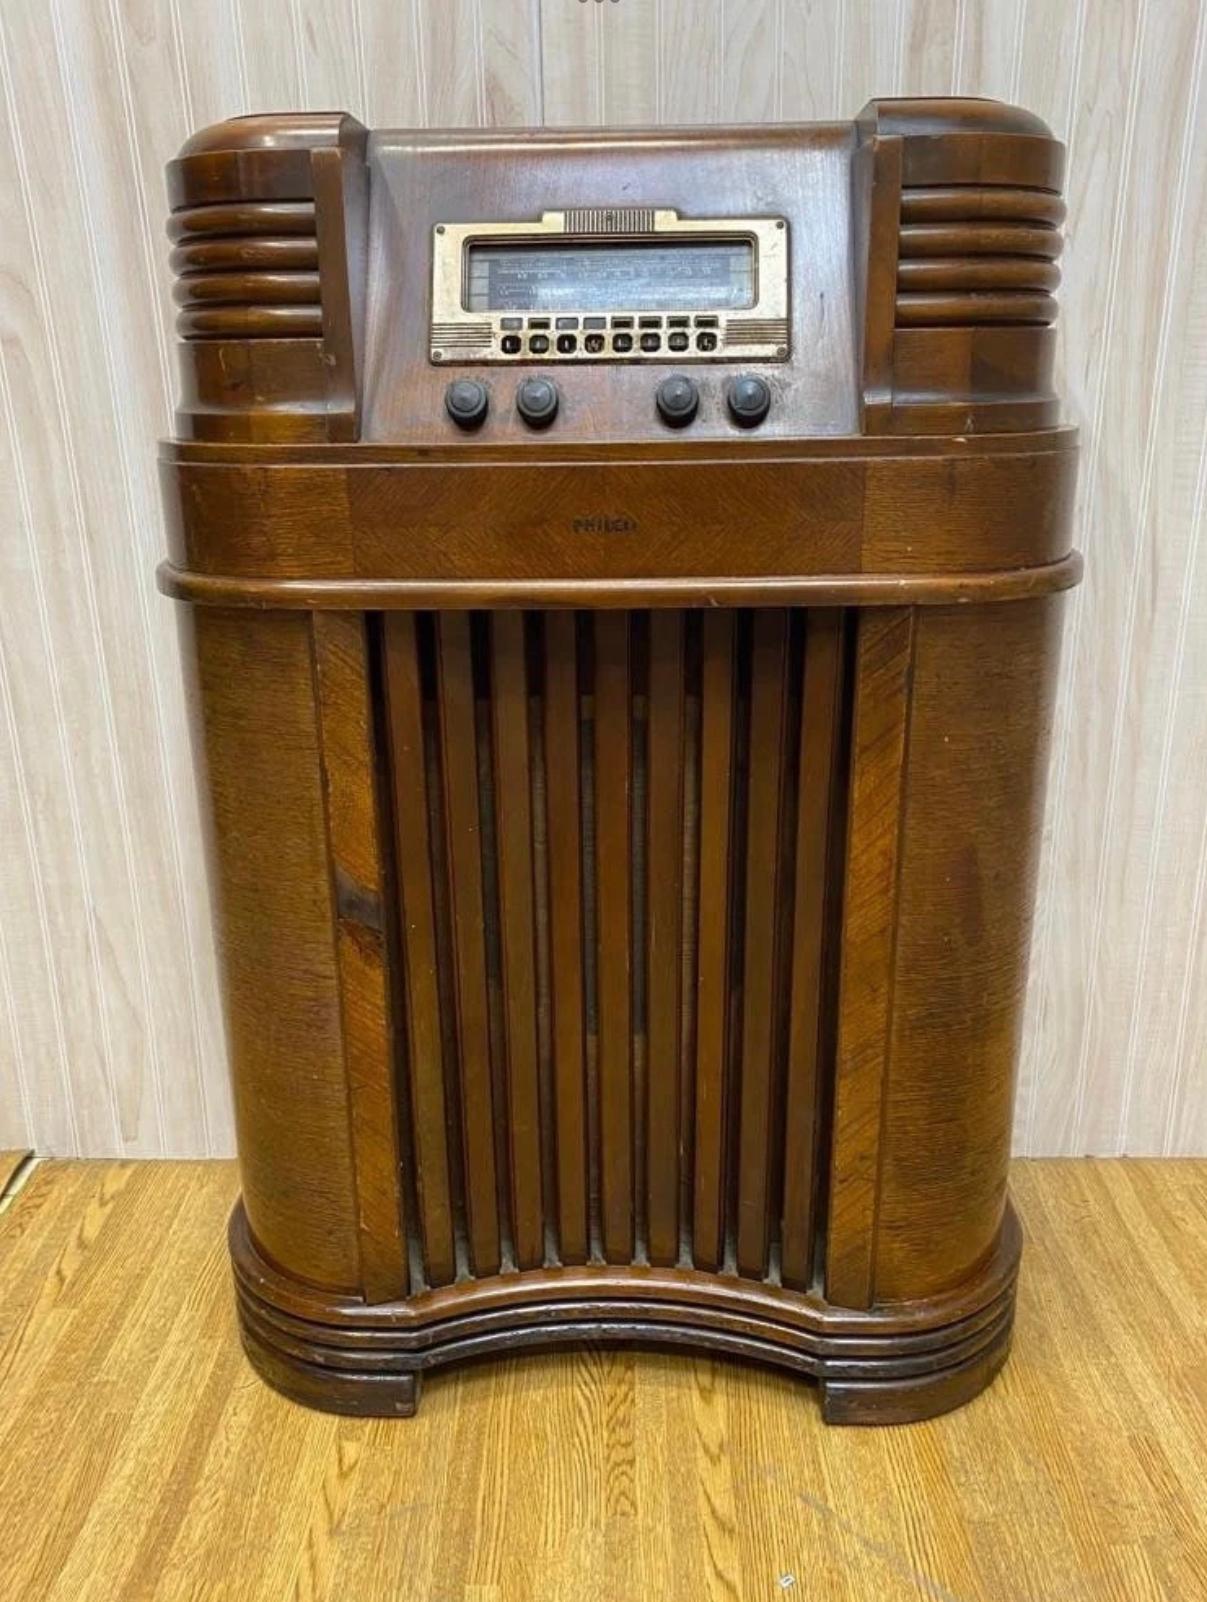 Antique Philco 40-180 Console Floor Radio 

La radio fonctionne. 

Circa : 1940

Dimensions :
H : 40